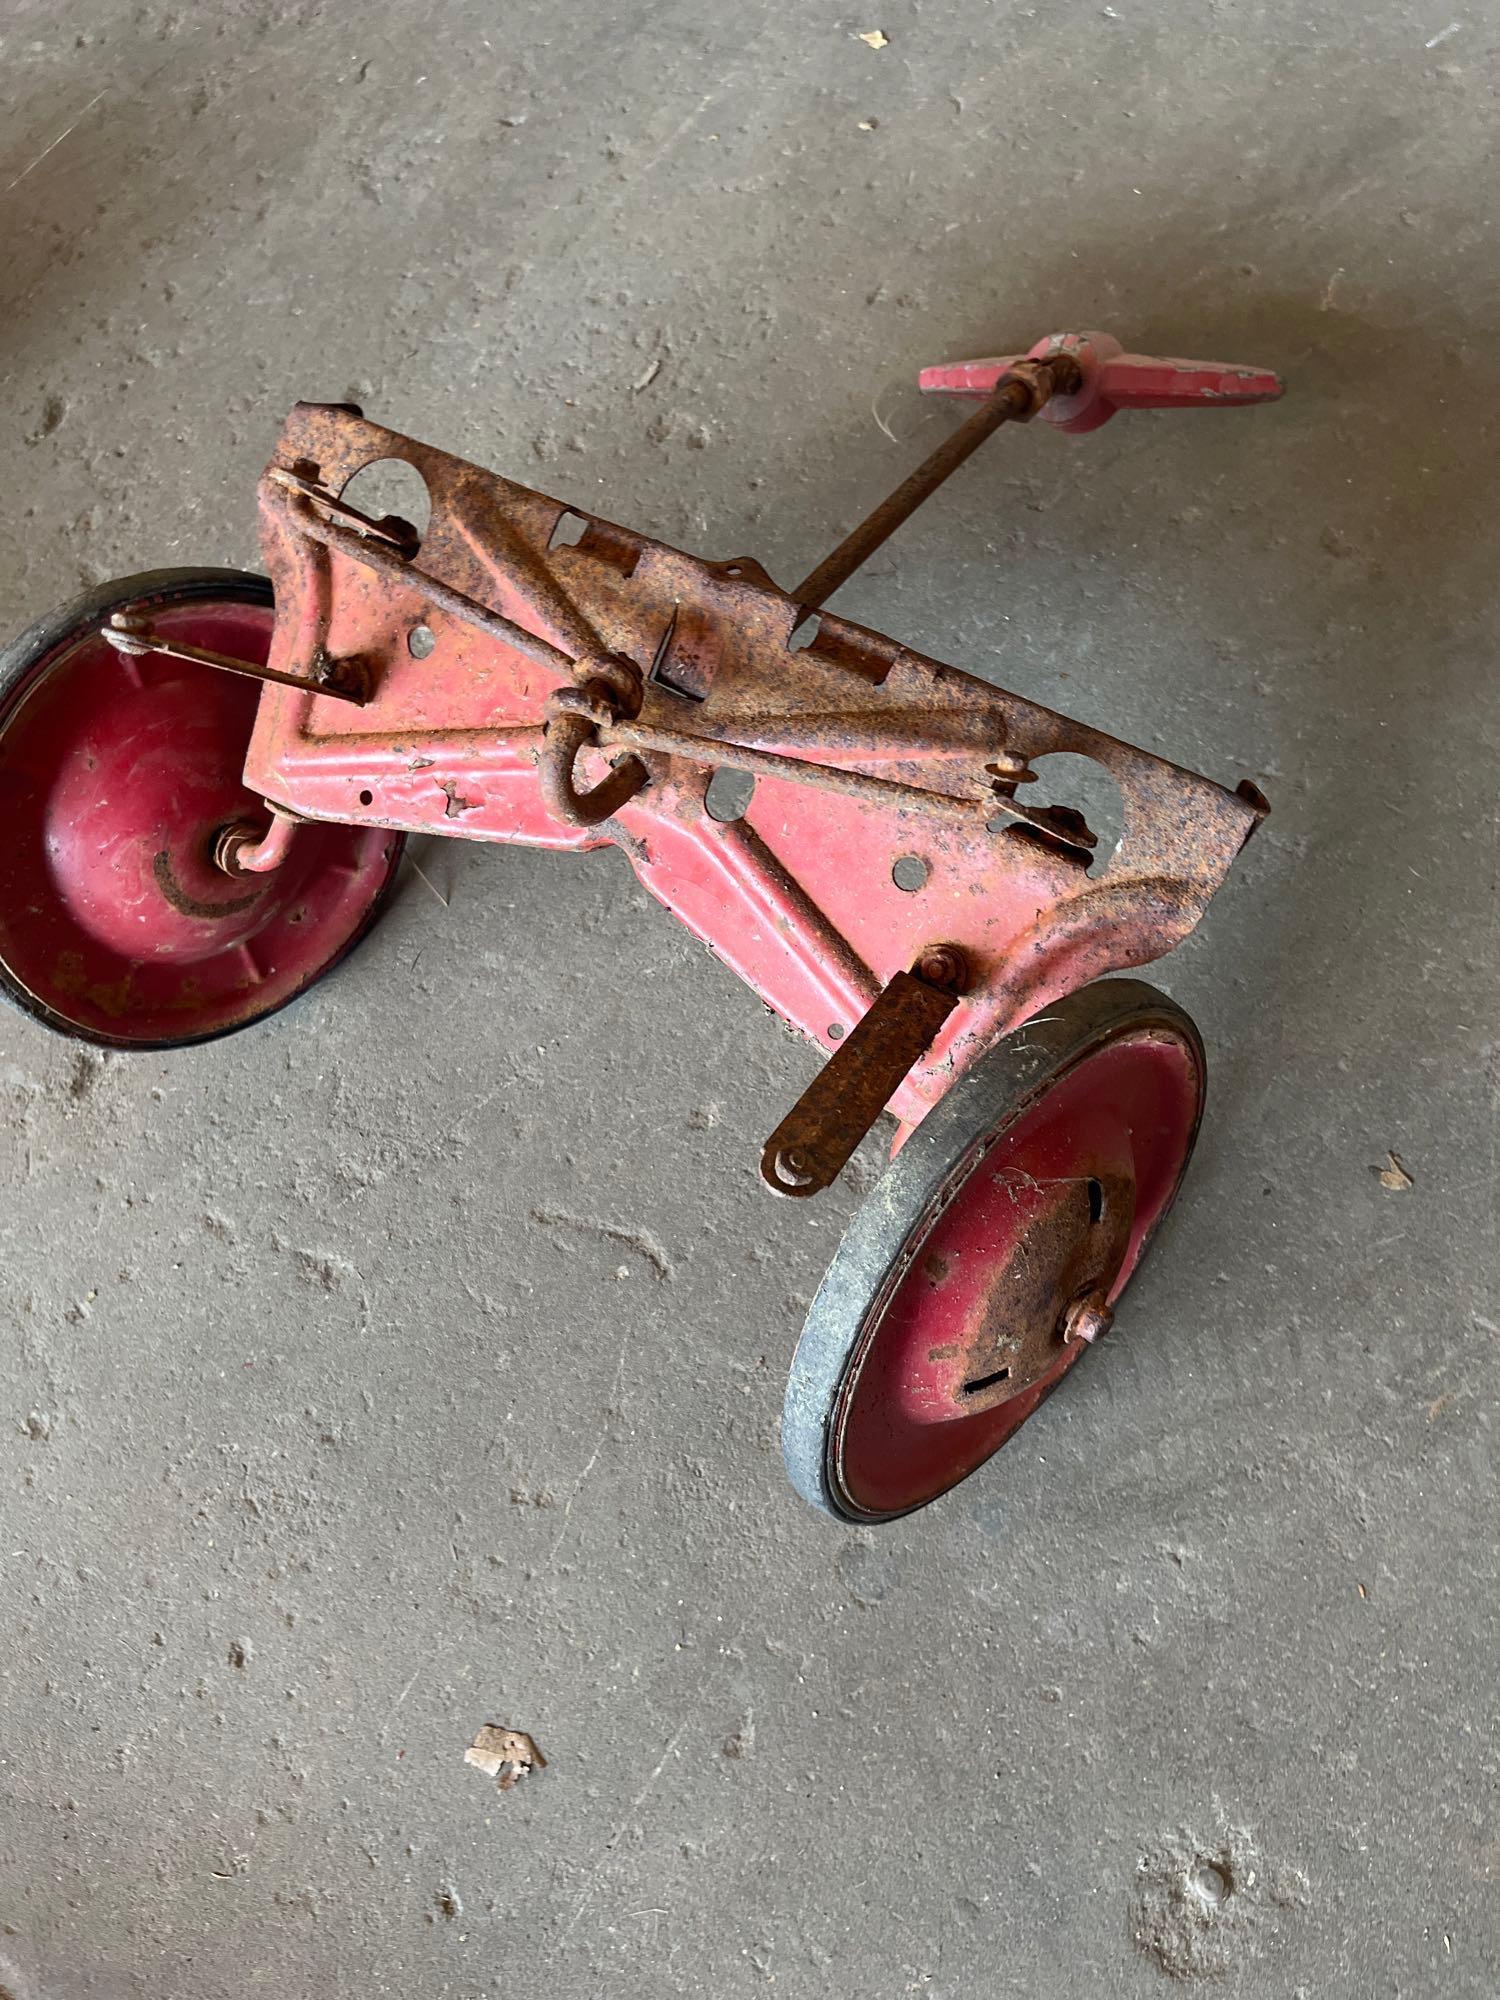 Vintage Tricycle/ toy pedal car parts. 5 pieces